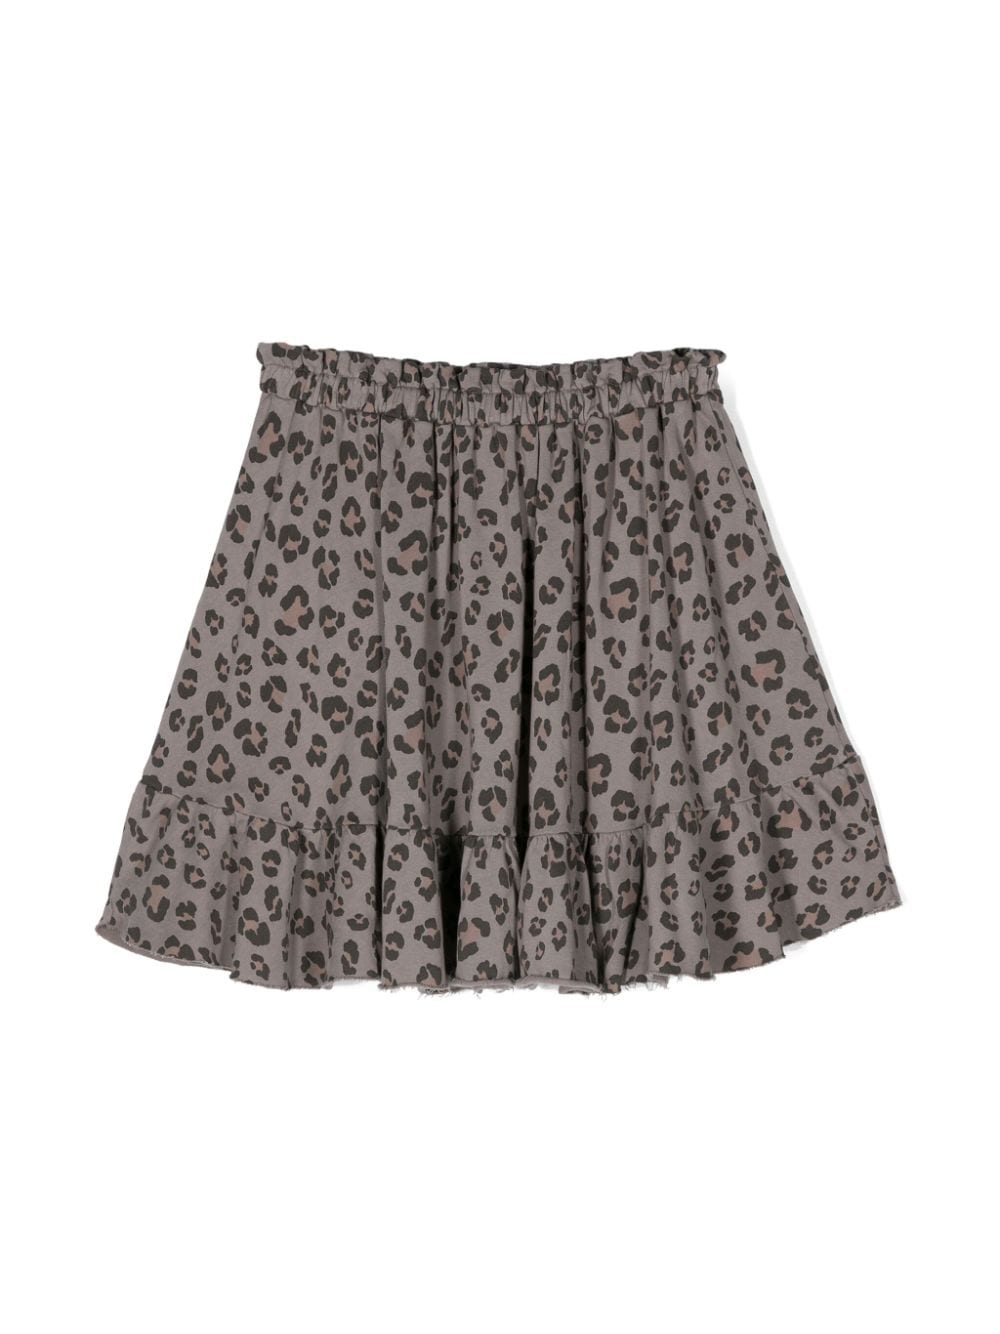 TOCOTO VINTAGE KIDS leopard-print cotton miniskirt - Grey von TOCOTO VINTAGE KIDS